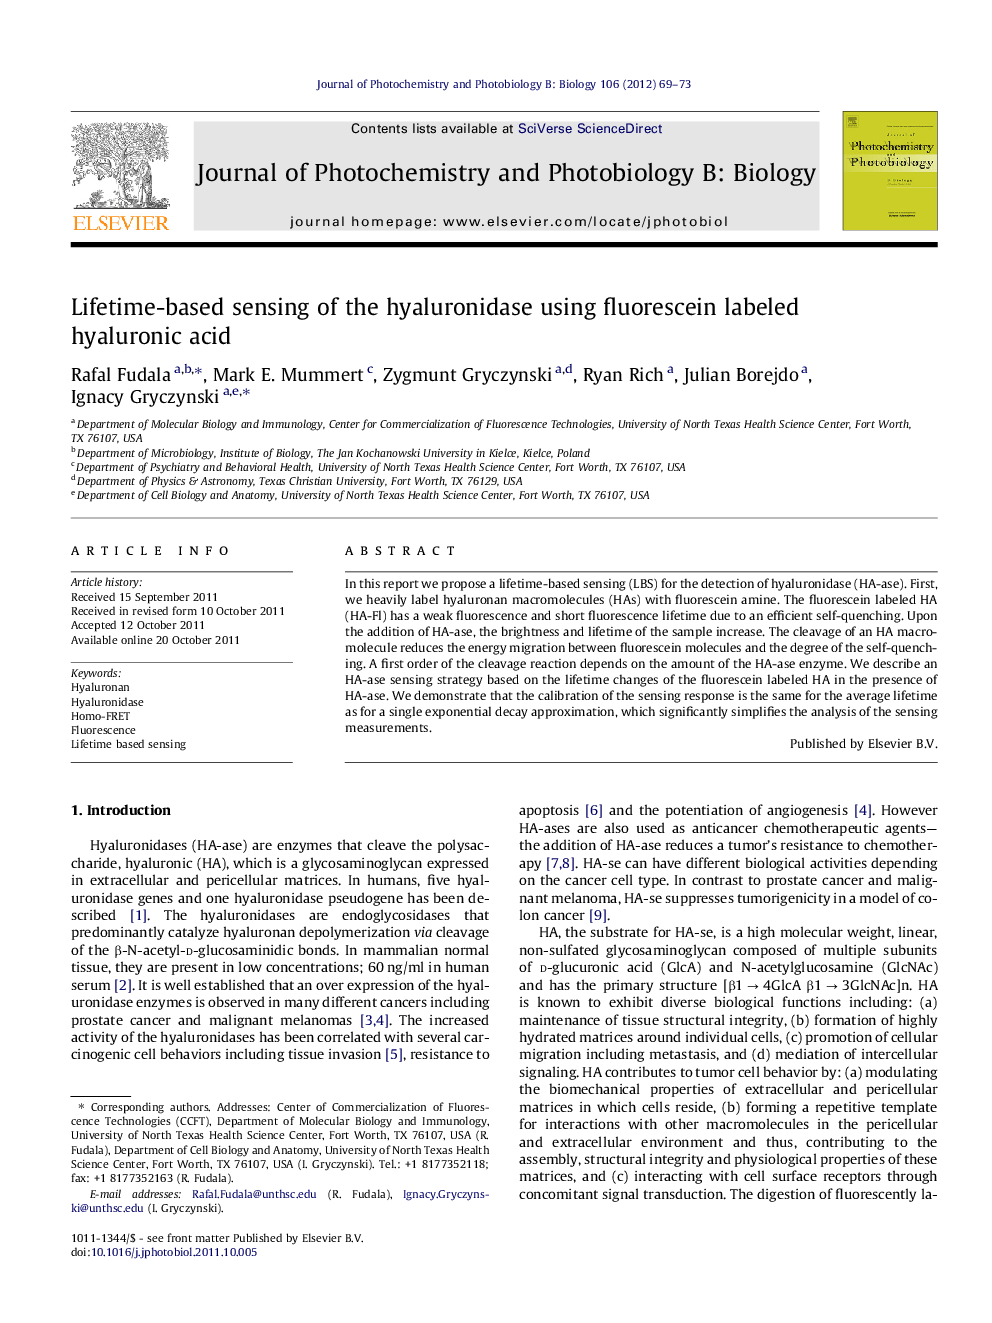 Lifetime-based sensing of the hyaluronidase using fluorescein labeled hyaluronic acid